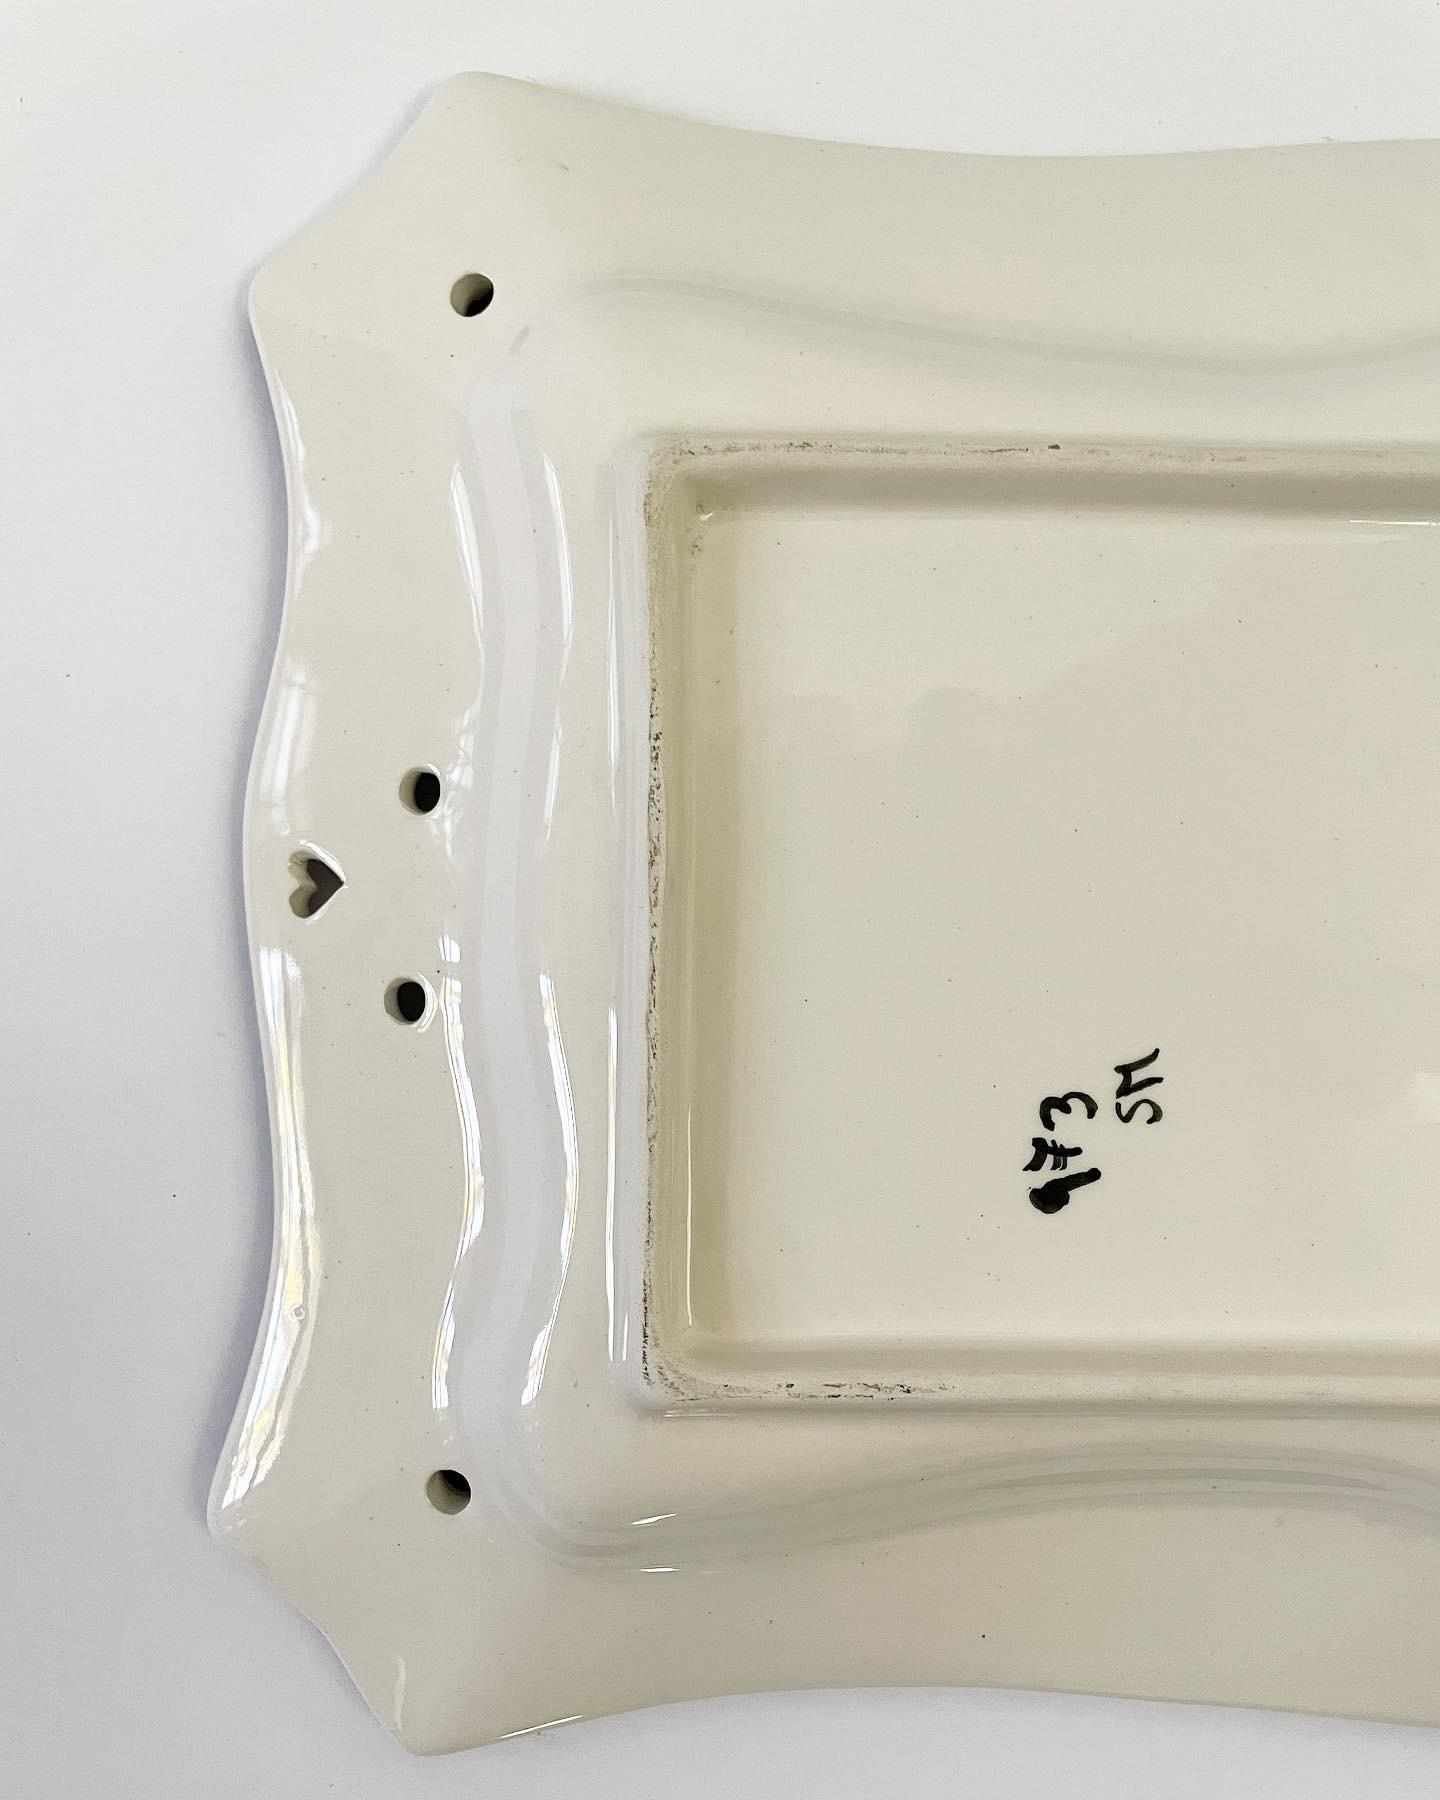 Vintage Hand-Painted Rectangular Ceramic Serving Platter